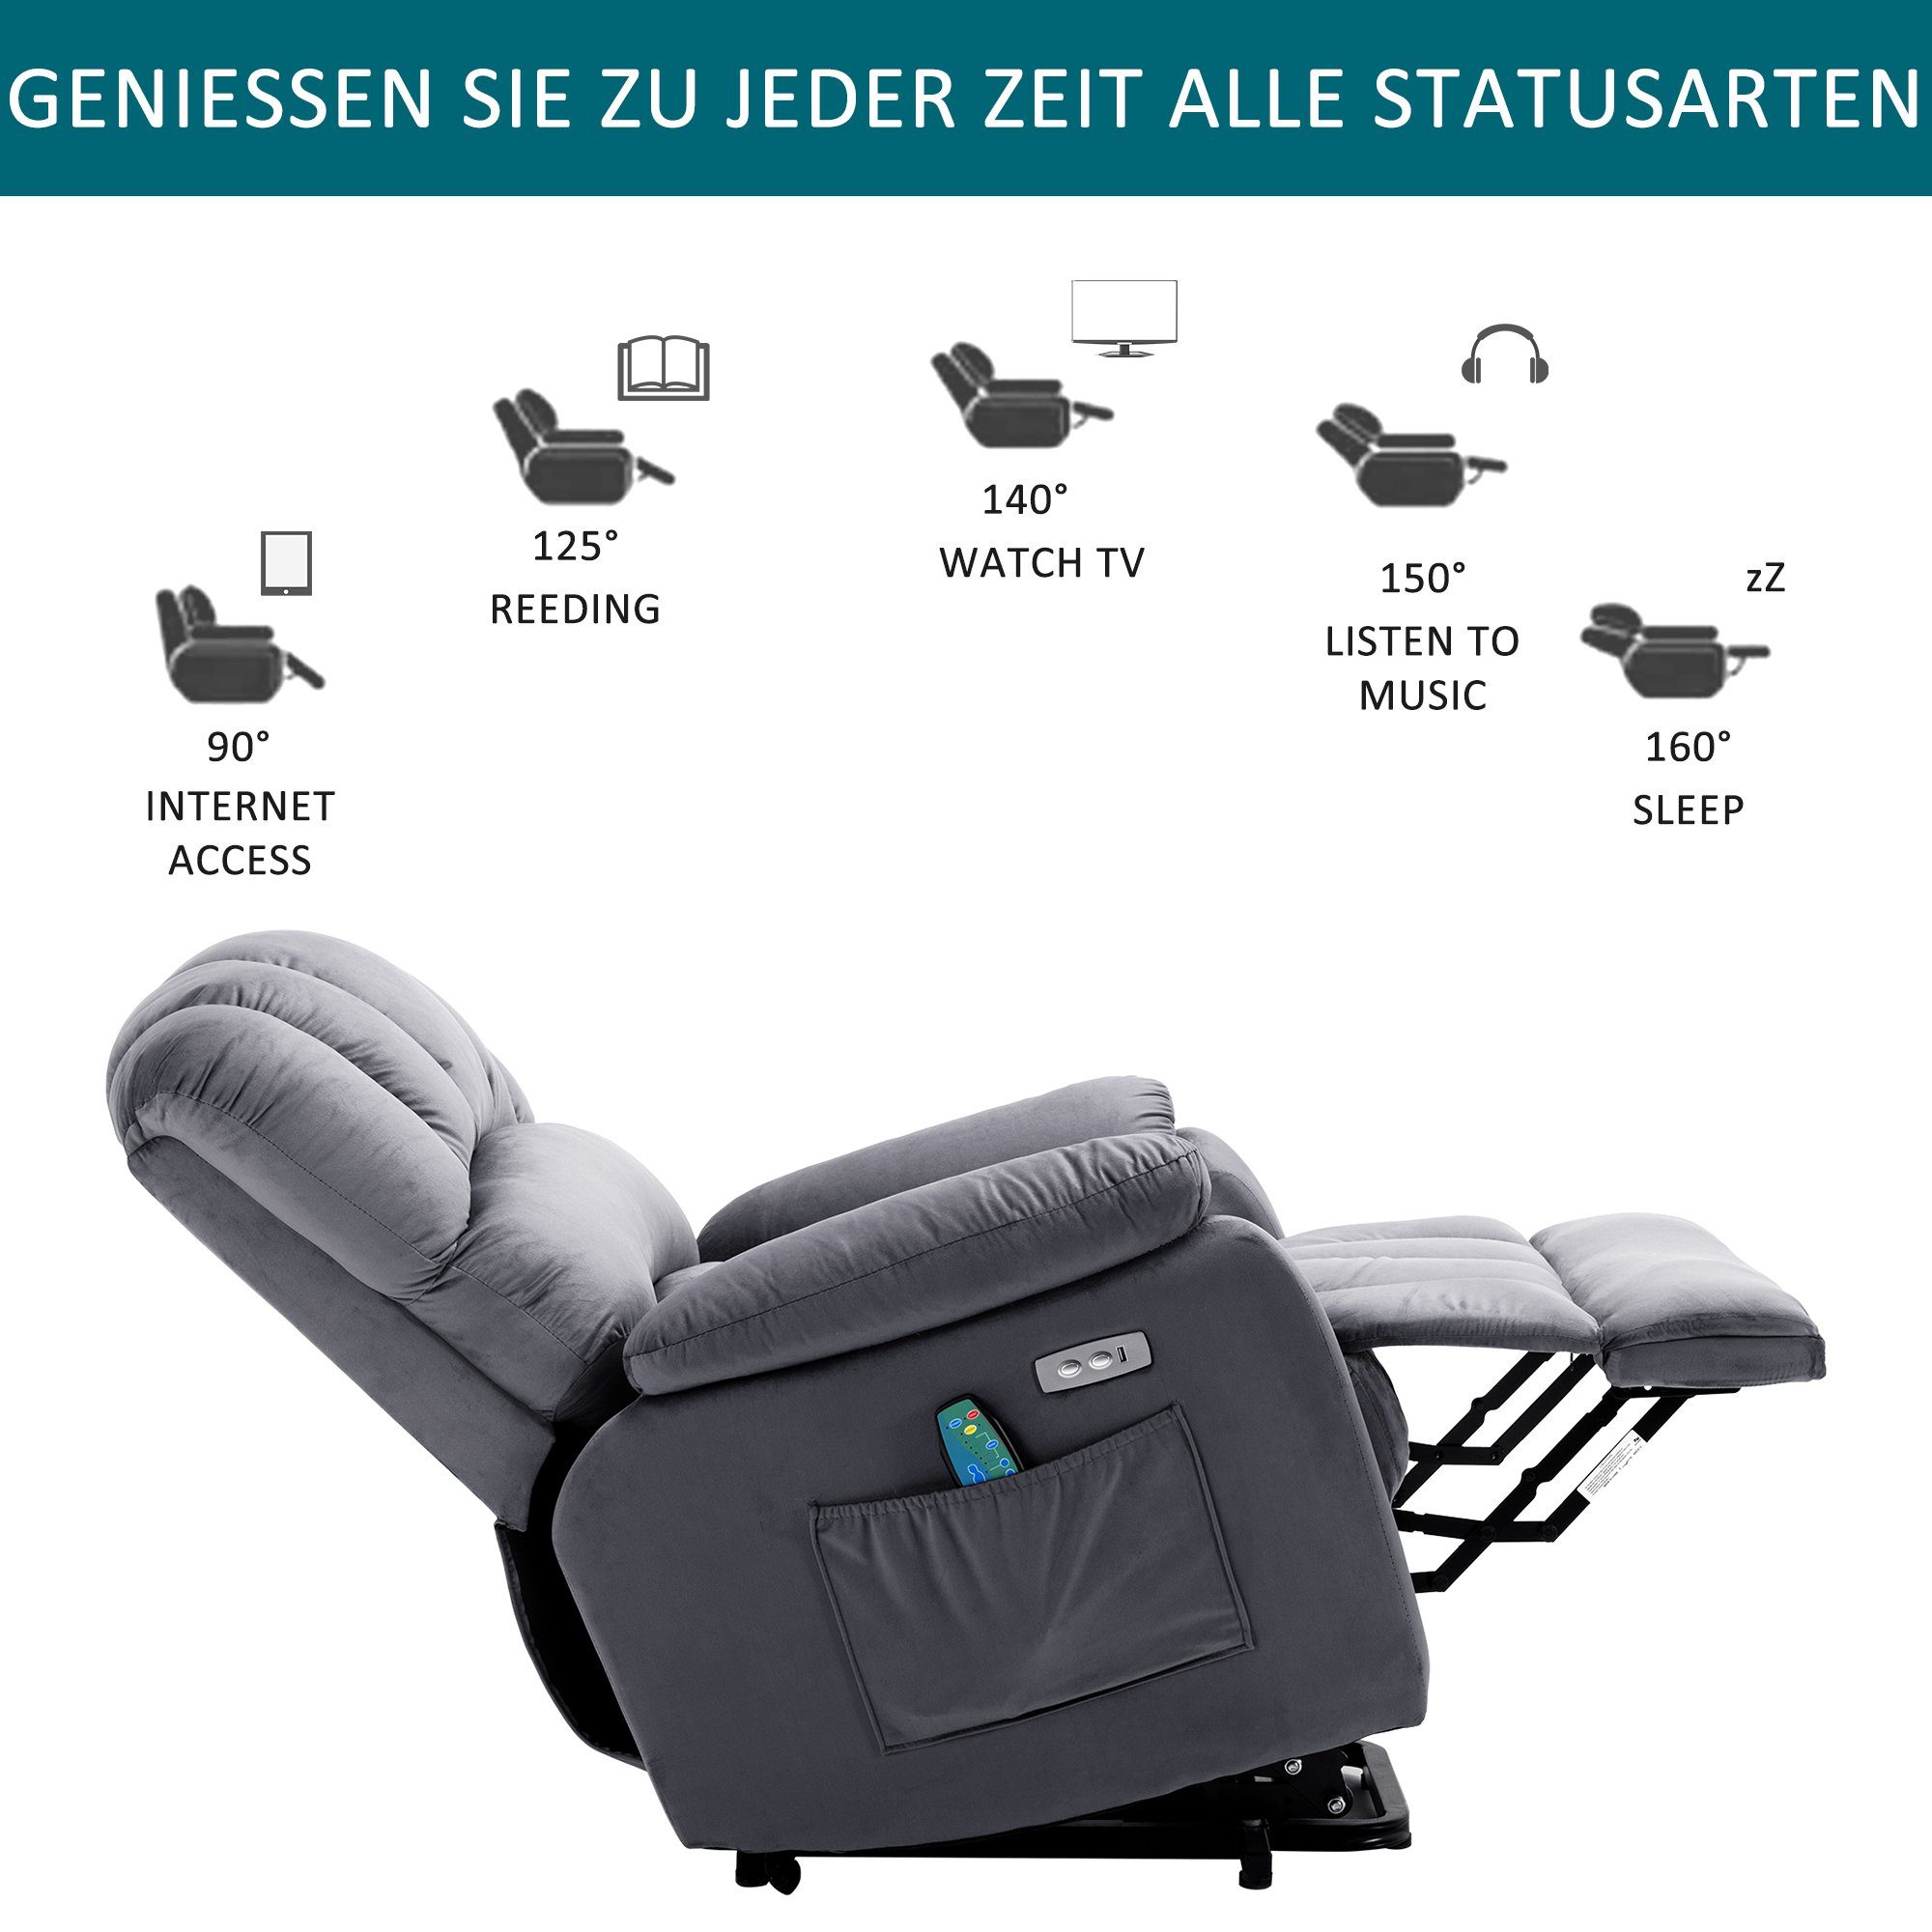 Fernsehsessel Massagesessel Wärmefunktion Grau/Rot Relaxsessel Liege Ruhesessel Odikalo &